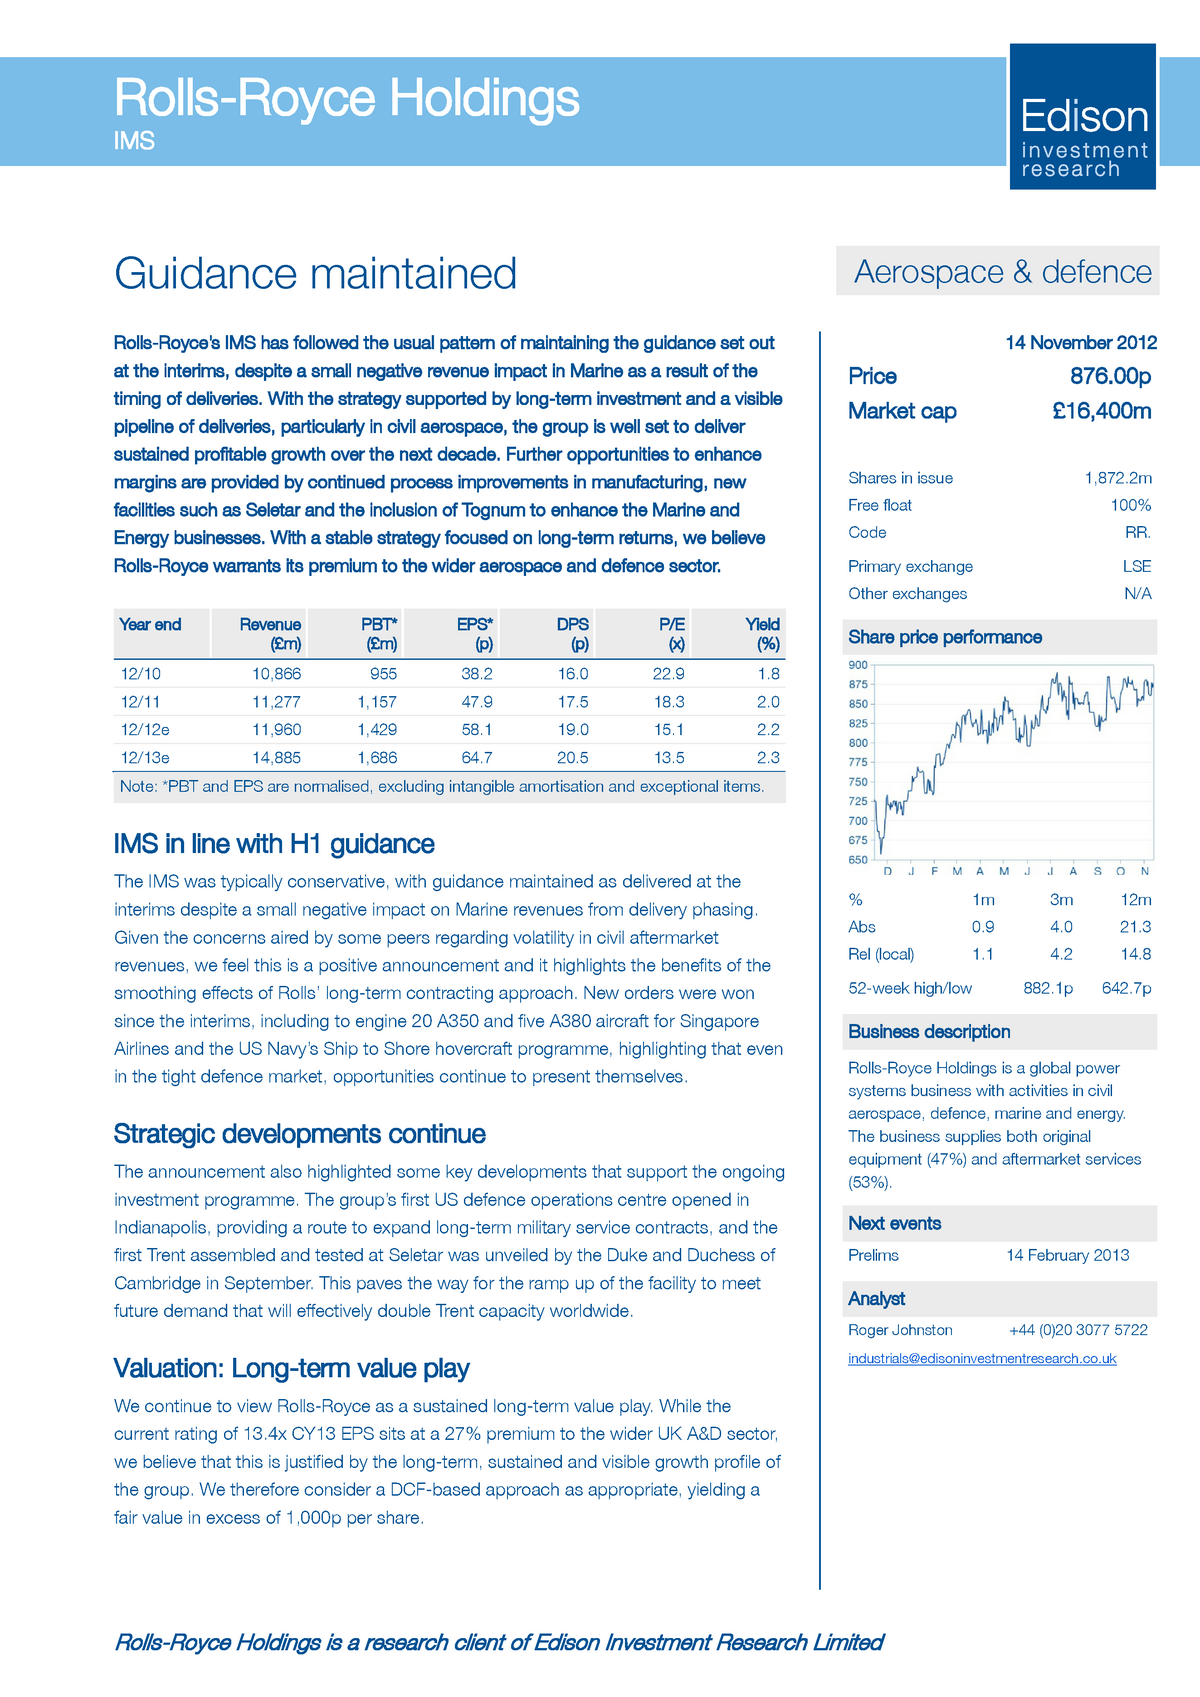 Rolls Royce Holdings Analysis - StuDocu